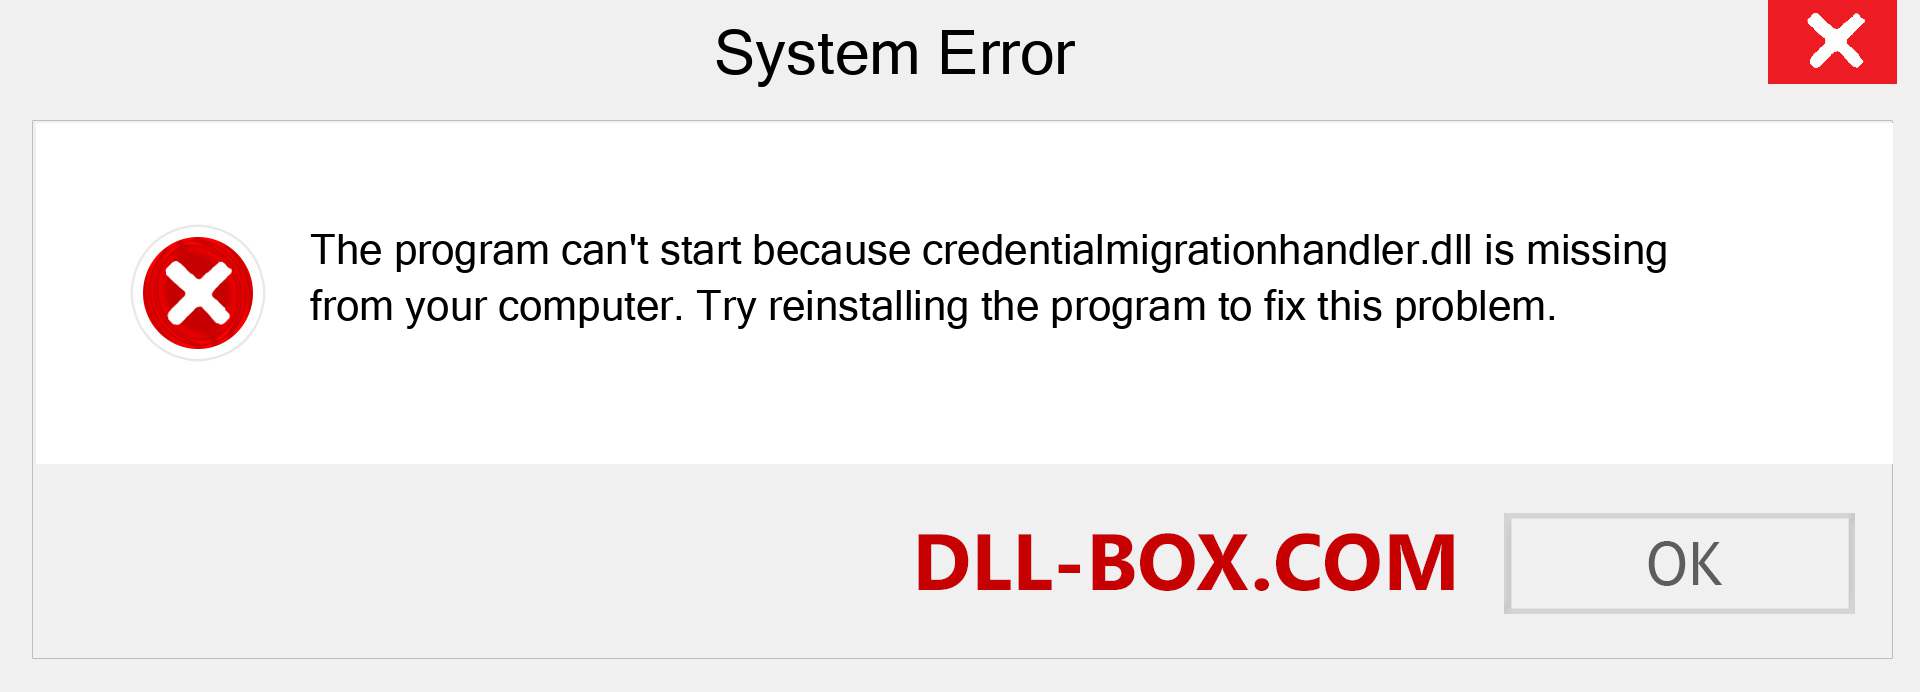  credentialmigrationhandler.dll file is missing?. Download for Windows 7, 8, 10 - Fix  credentialmigrationhandler dll Missing Error on Windows, photos, images